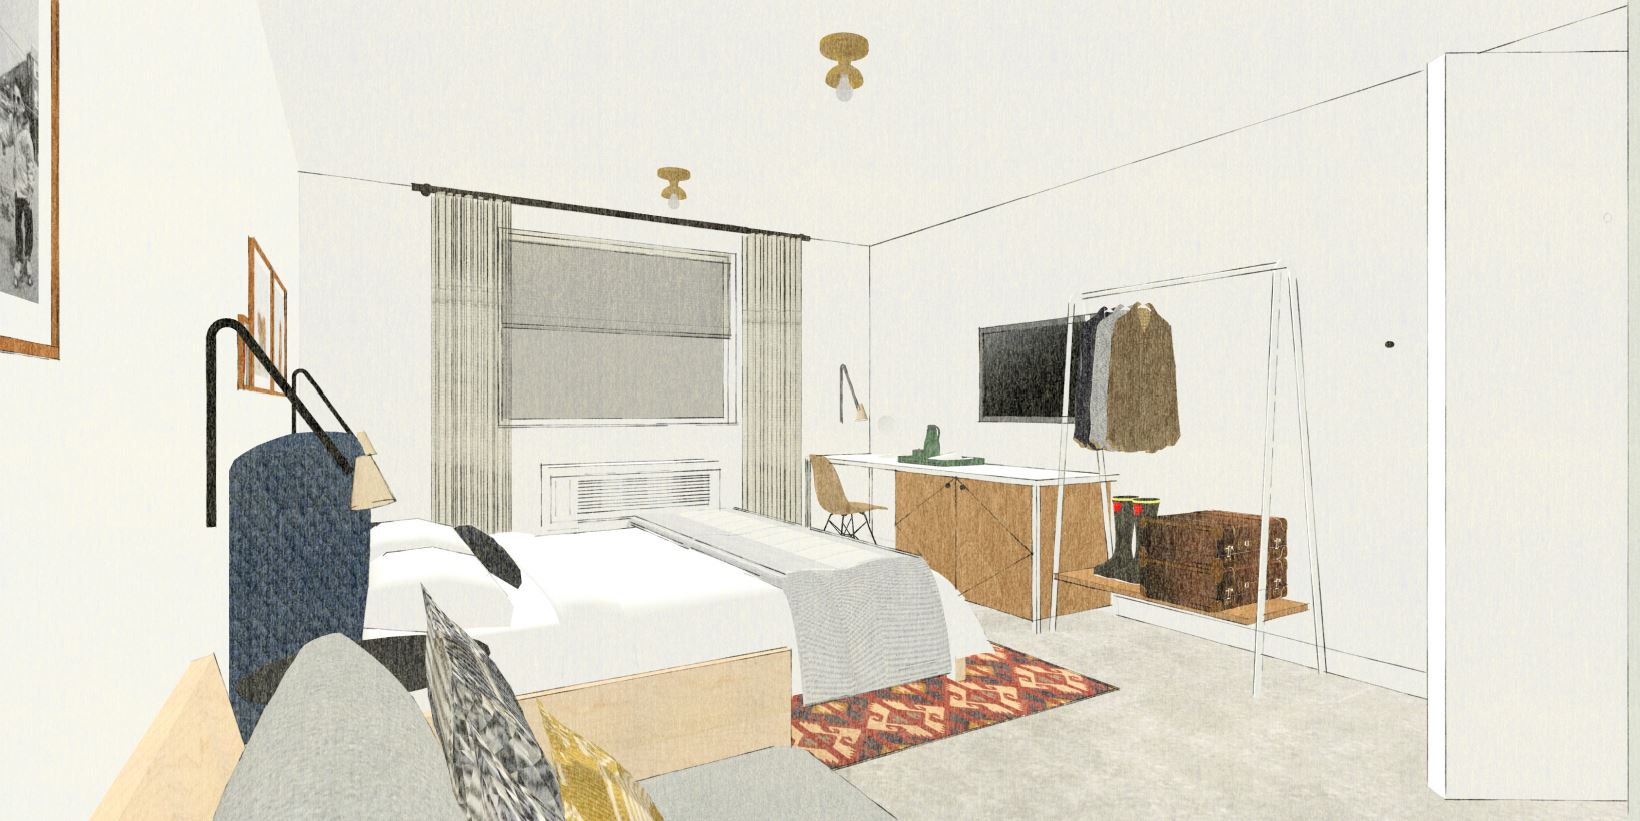 A Trumbull & Porter room rendering